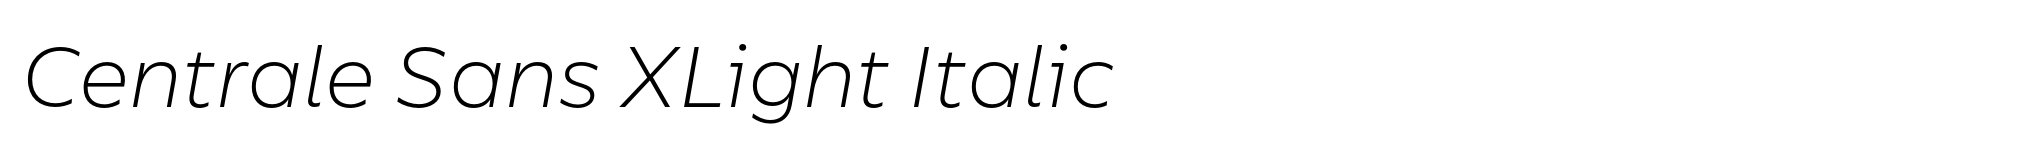 Centrale Sans XLight Italic image